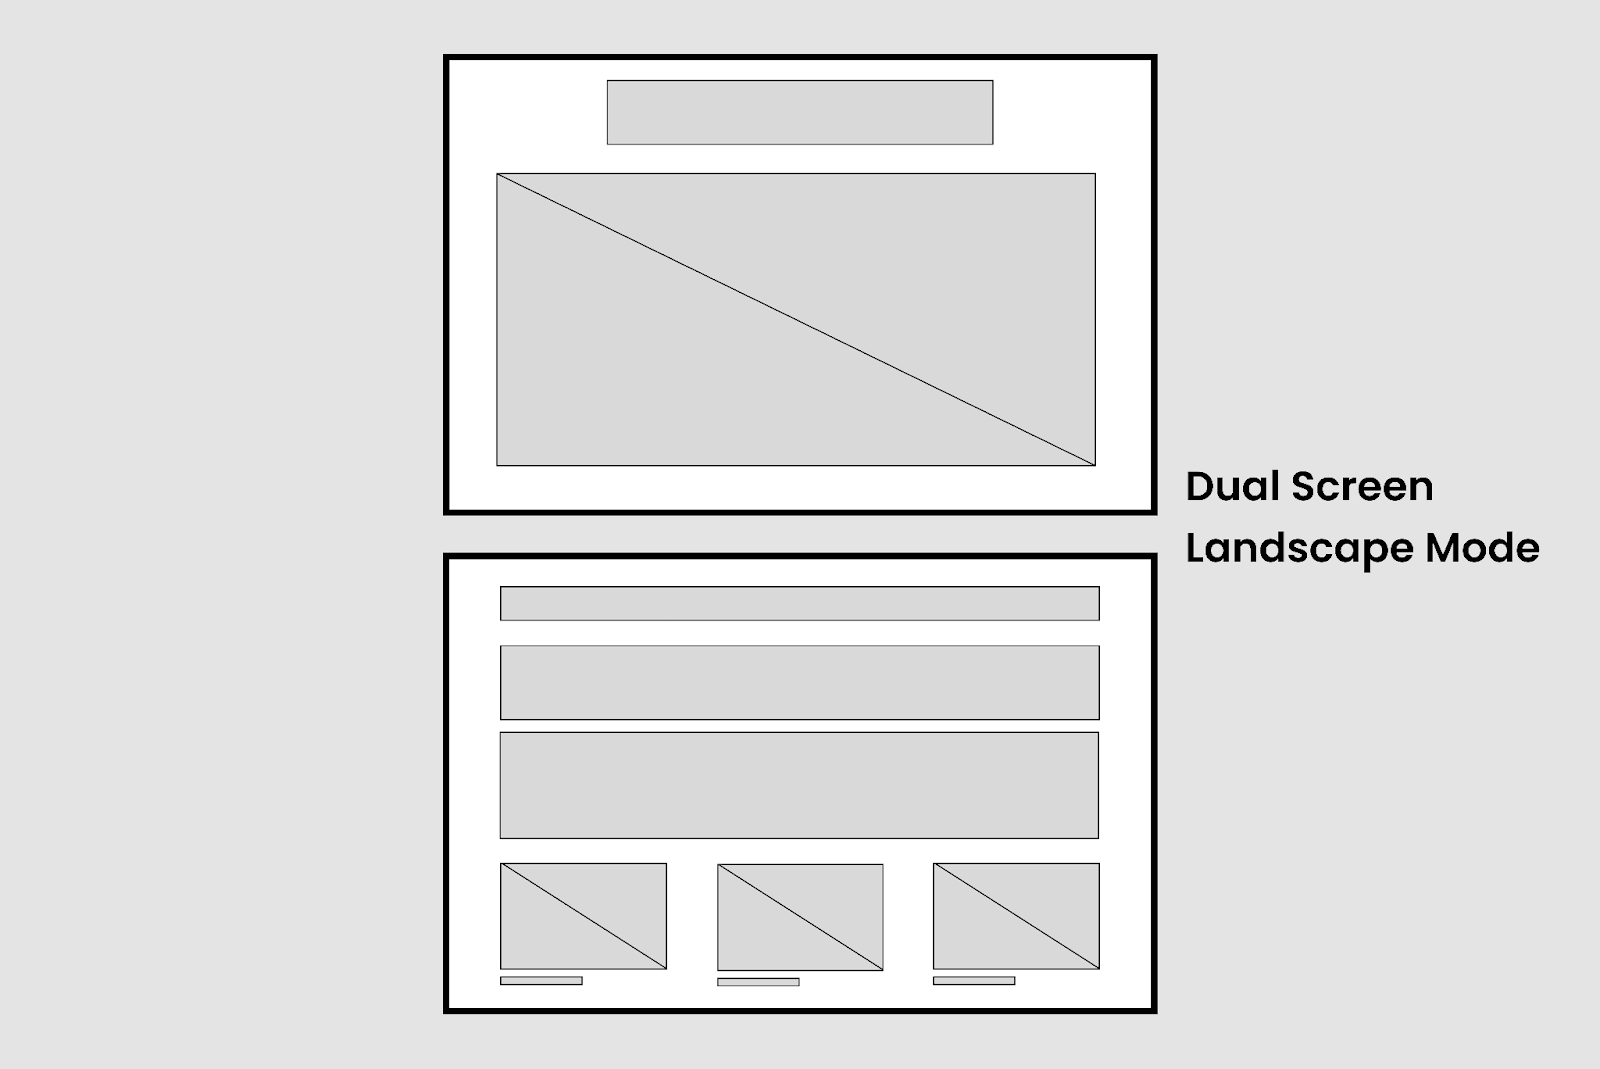 Dual Screen Landscape Mode